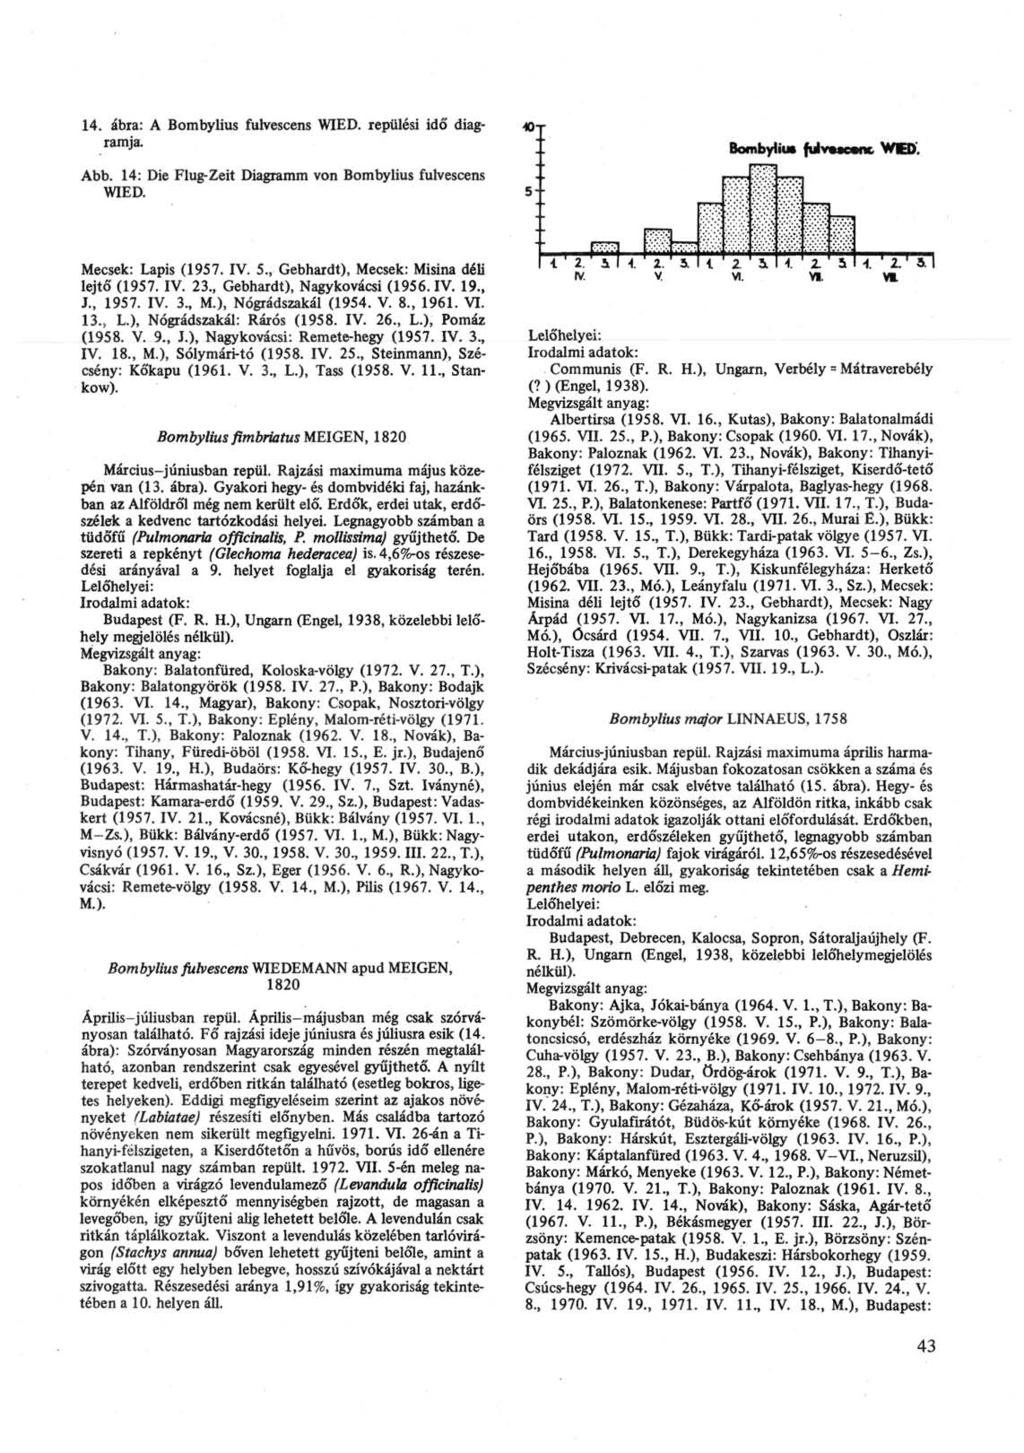 14. ábra: A Bombylius fulvescens WIED. repülési idő diagramja. Abb. 14: Die Flug-Zeit Diagramm von Bombylius fulvescens WIED. Mecsek: Lapis (1957. IV. 5., Gebhardt), Mecsek: Misina déli lejtő (1957.